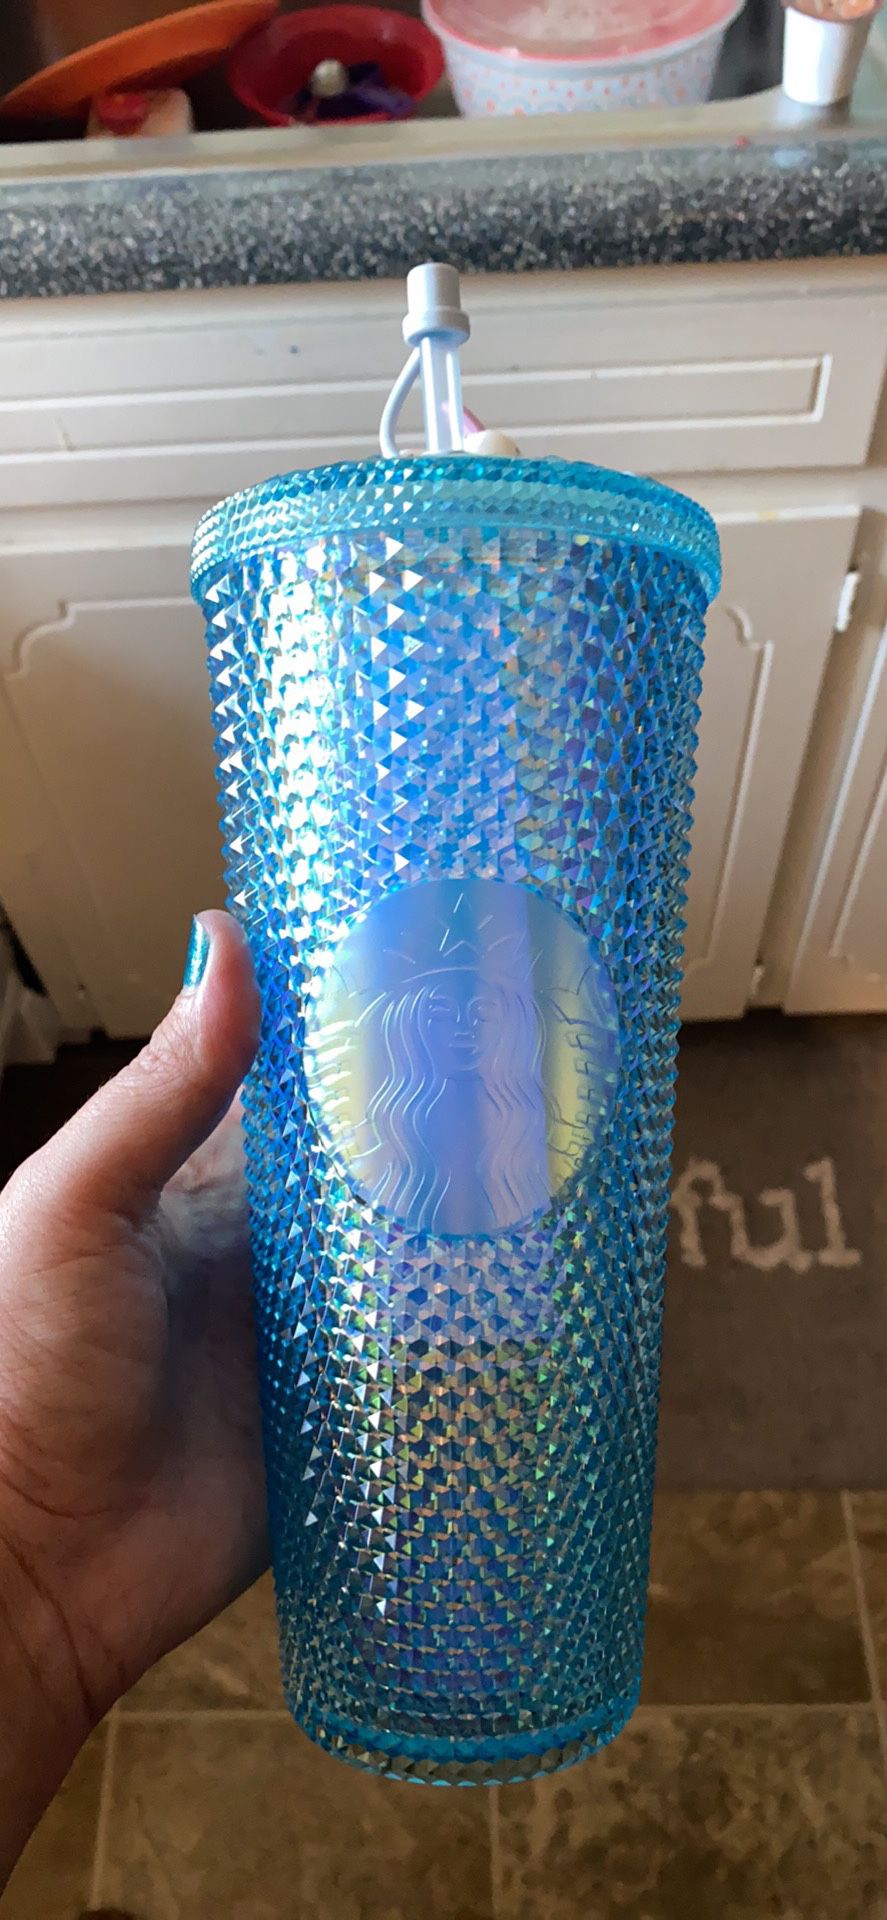 Brand new Starbucks studded cup